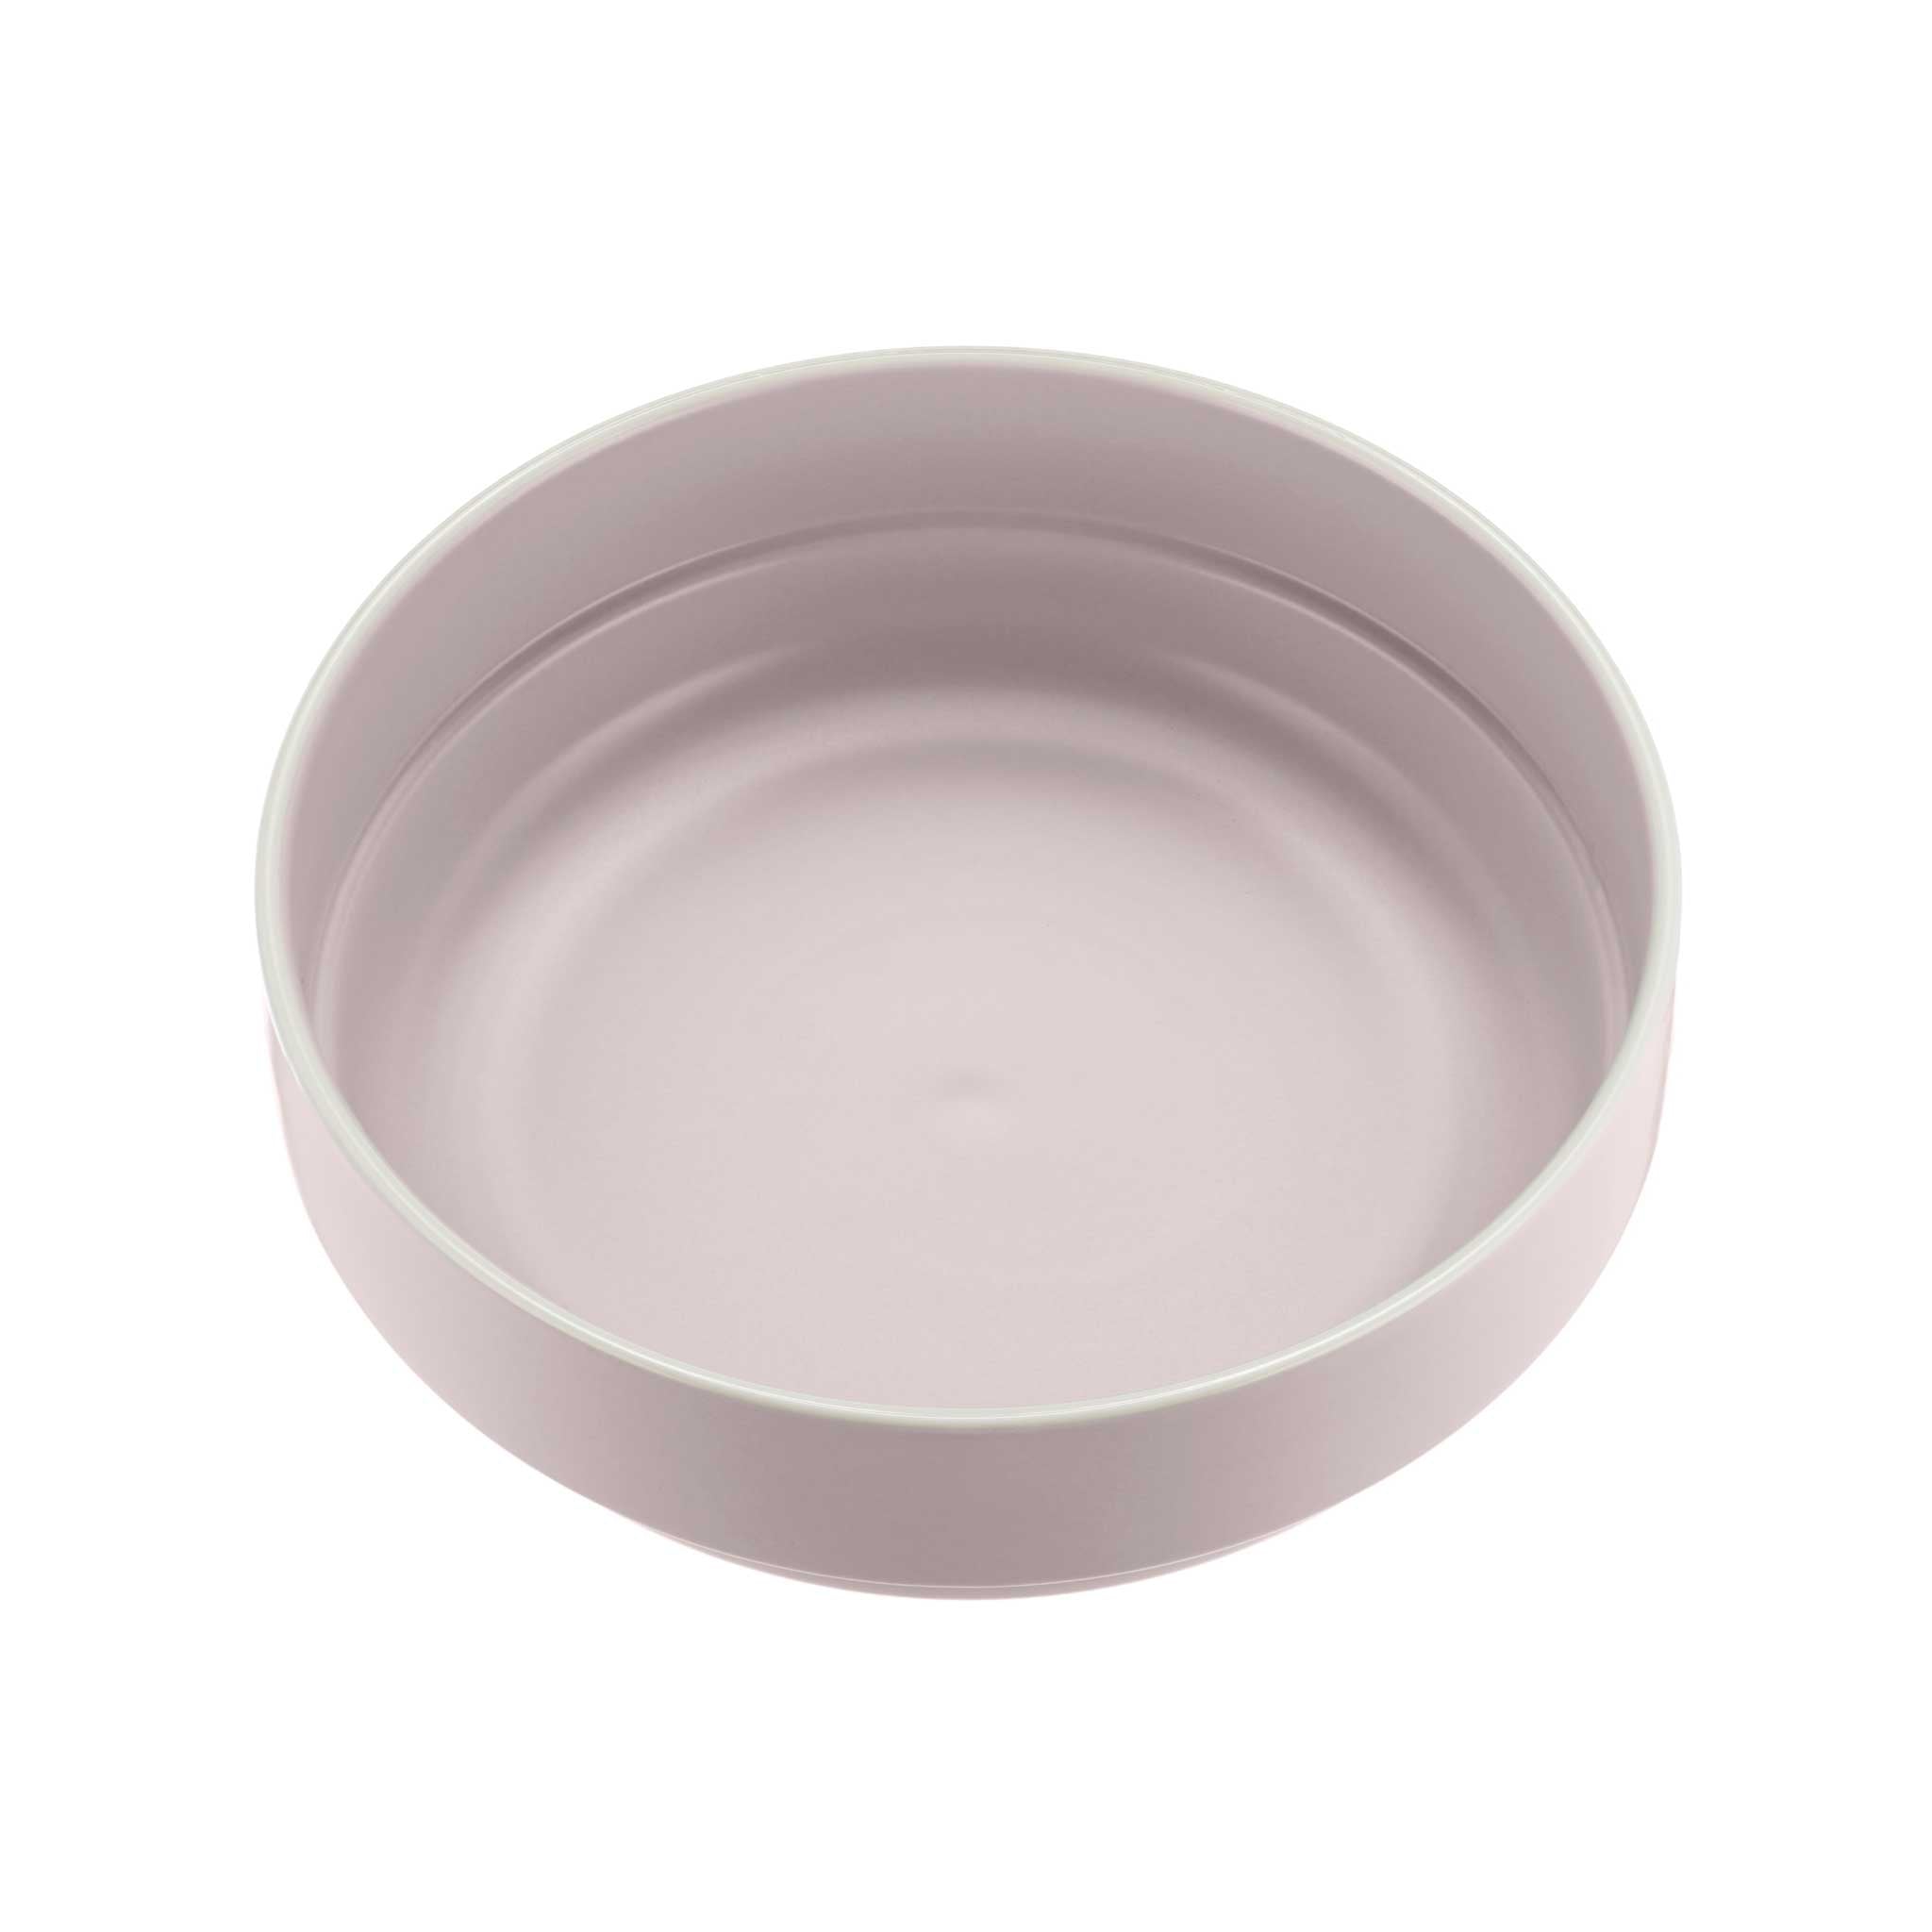 Pink Ceramic Pasta / Salad Bowl from China Blue